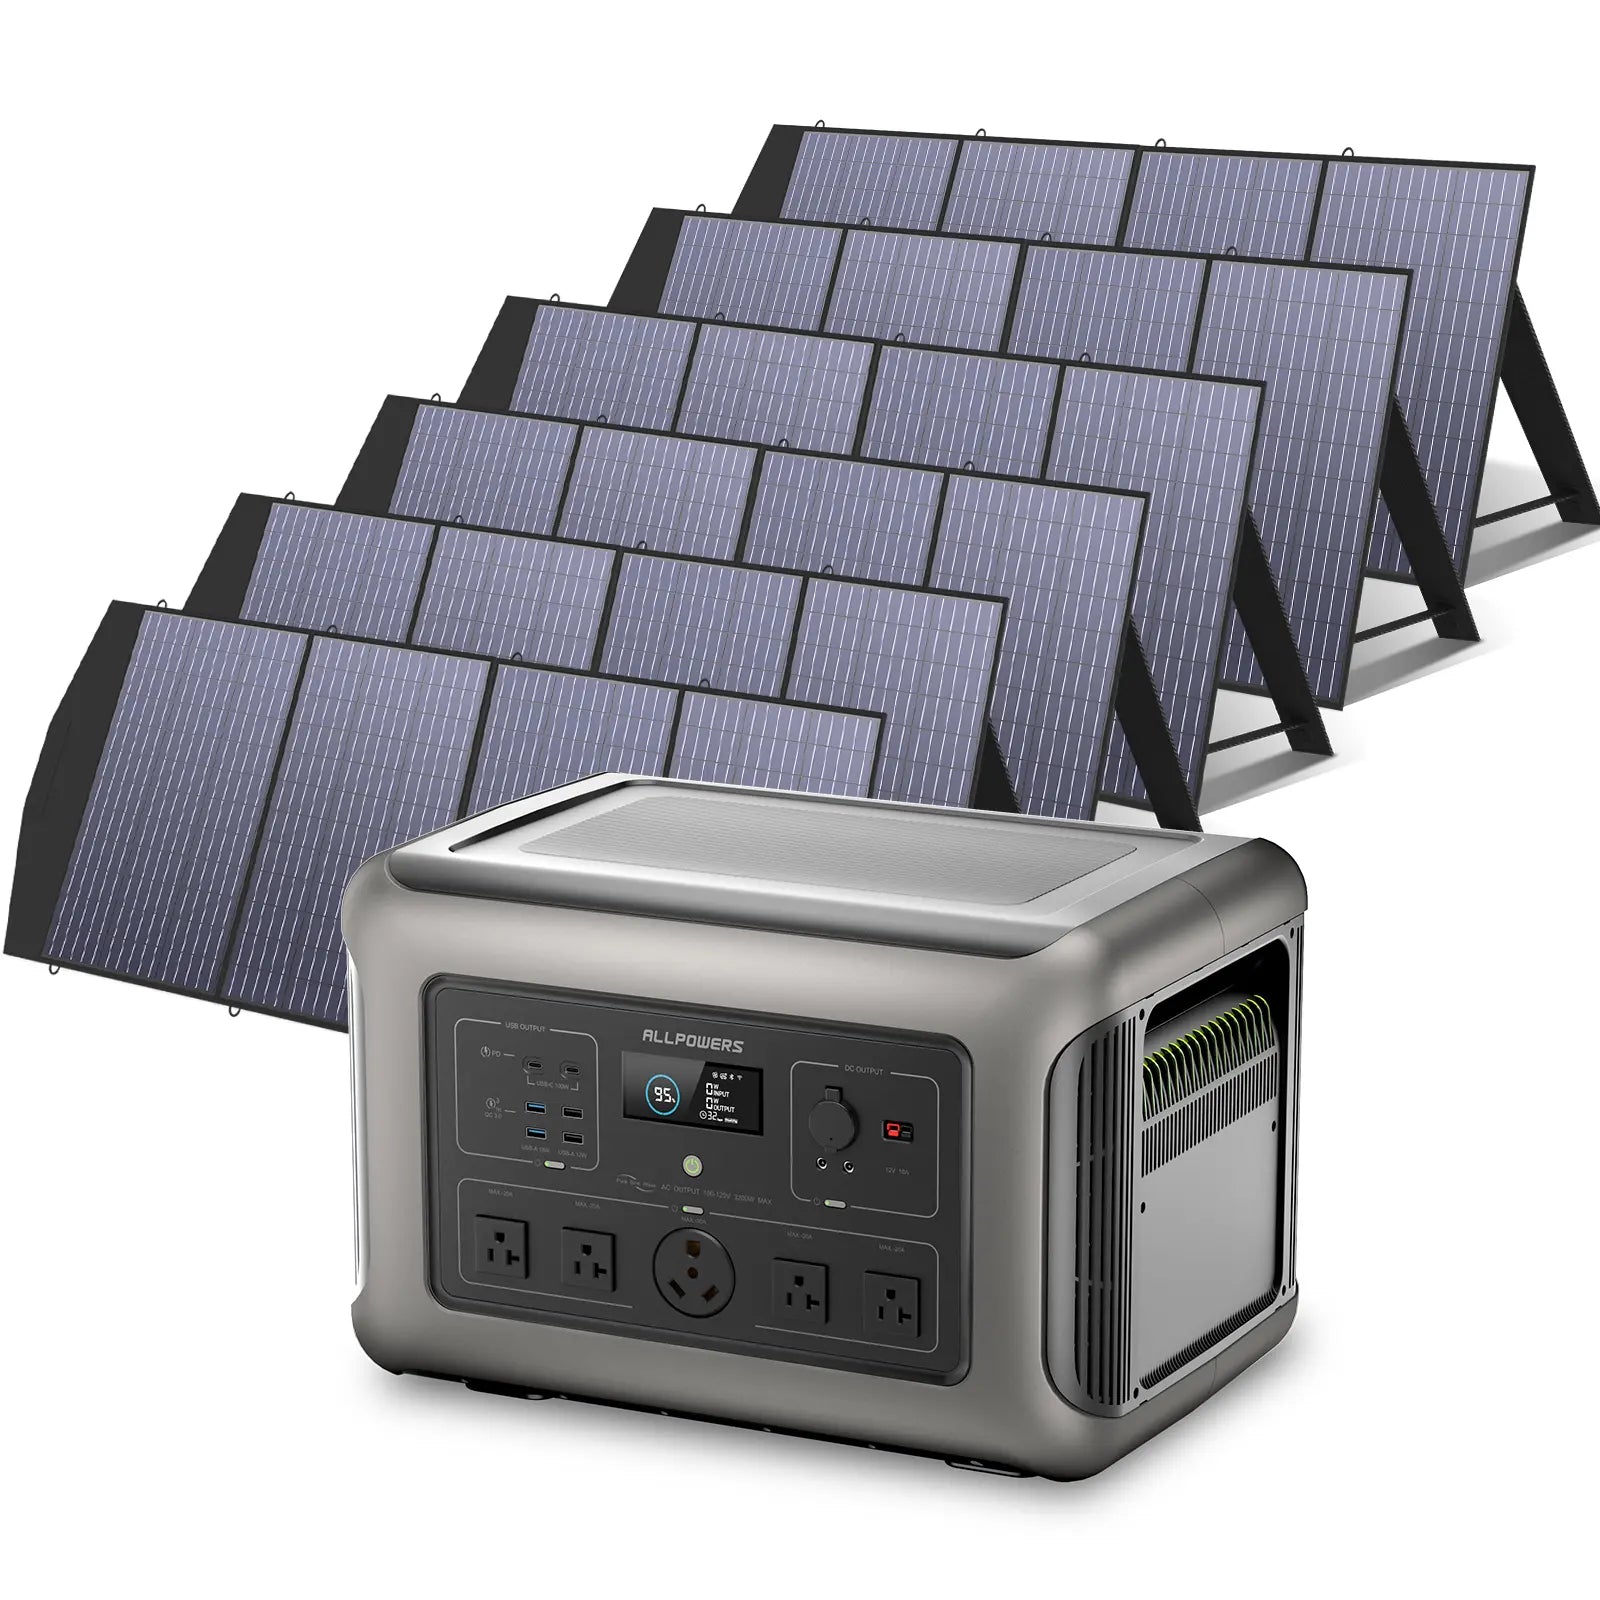 ALLPOWERS Solar Generator Kit 3200W (R3500 + 6 x SP033 200W Solar Panel)